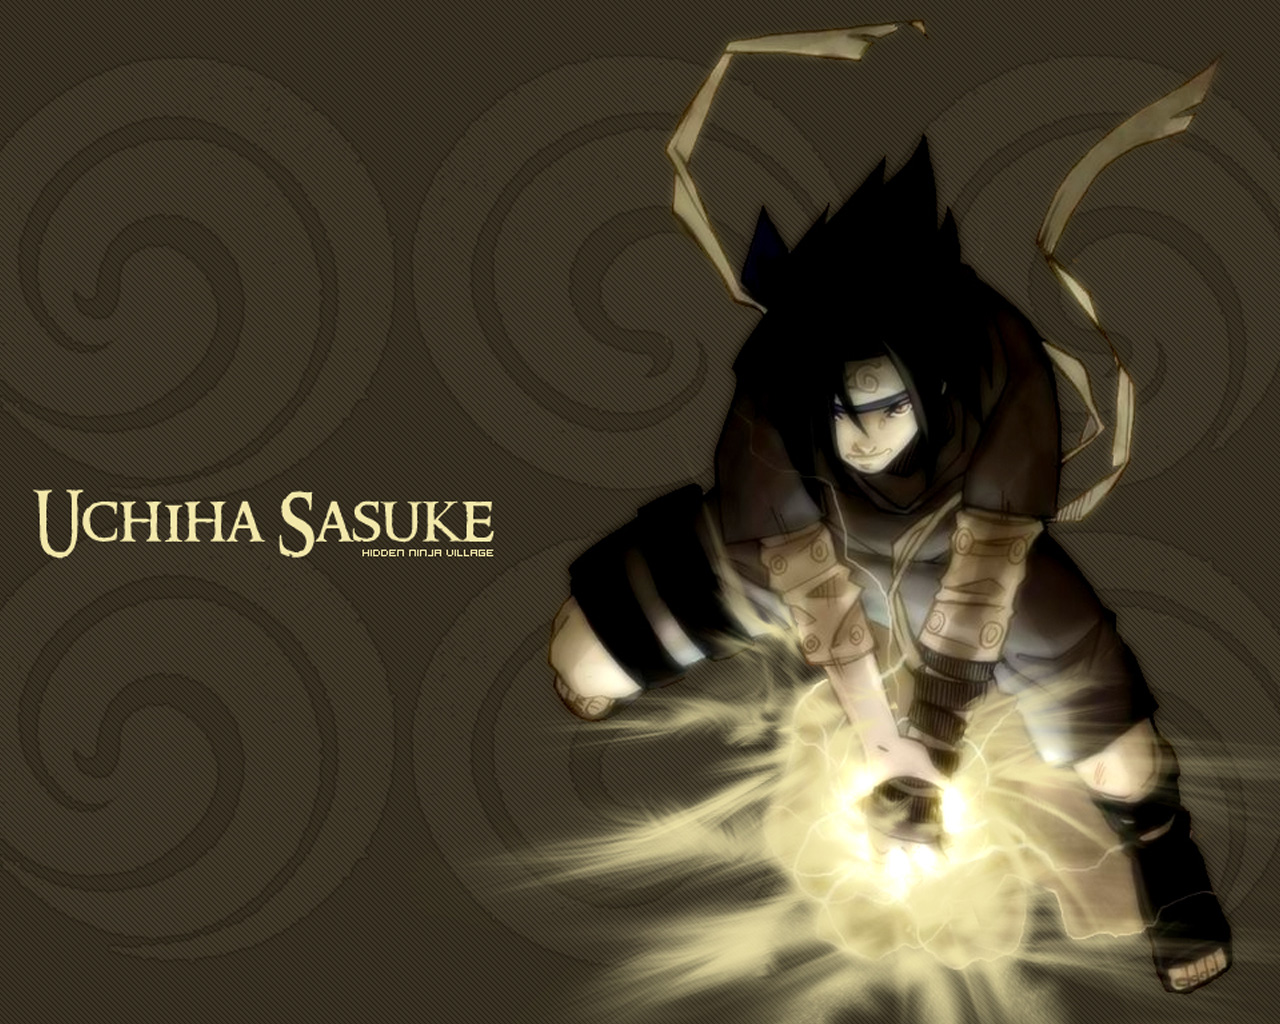 http://3.bp.blogspot.com/-bLPLeRSQSlk/TWzOj8ZZHrI/AAAAAAAABIg/zHyfYobz5cE/s1600/uchiha-sasuke-wallpaper.jpg